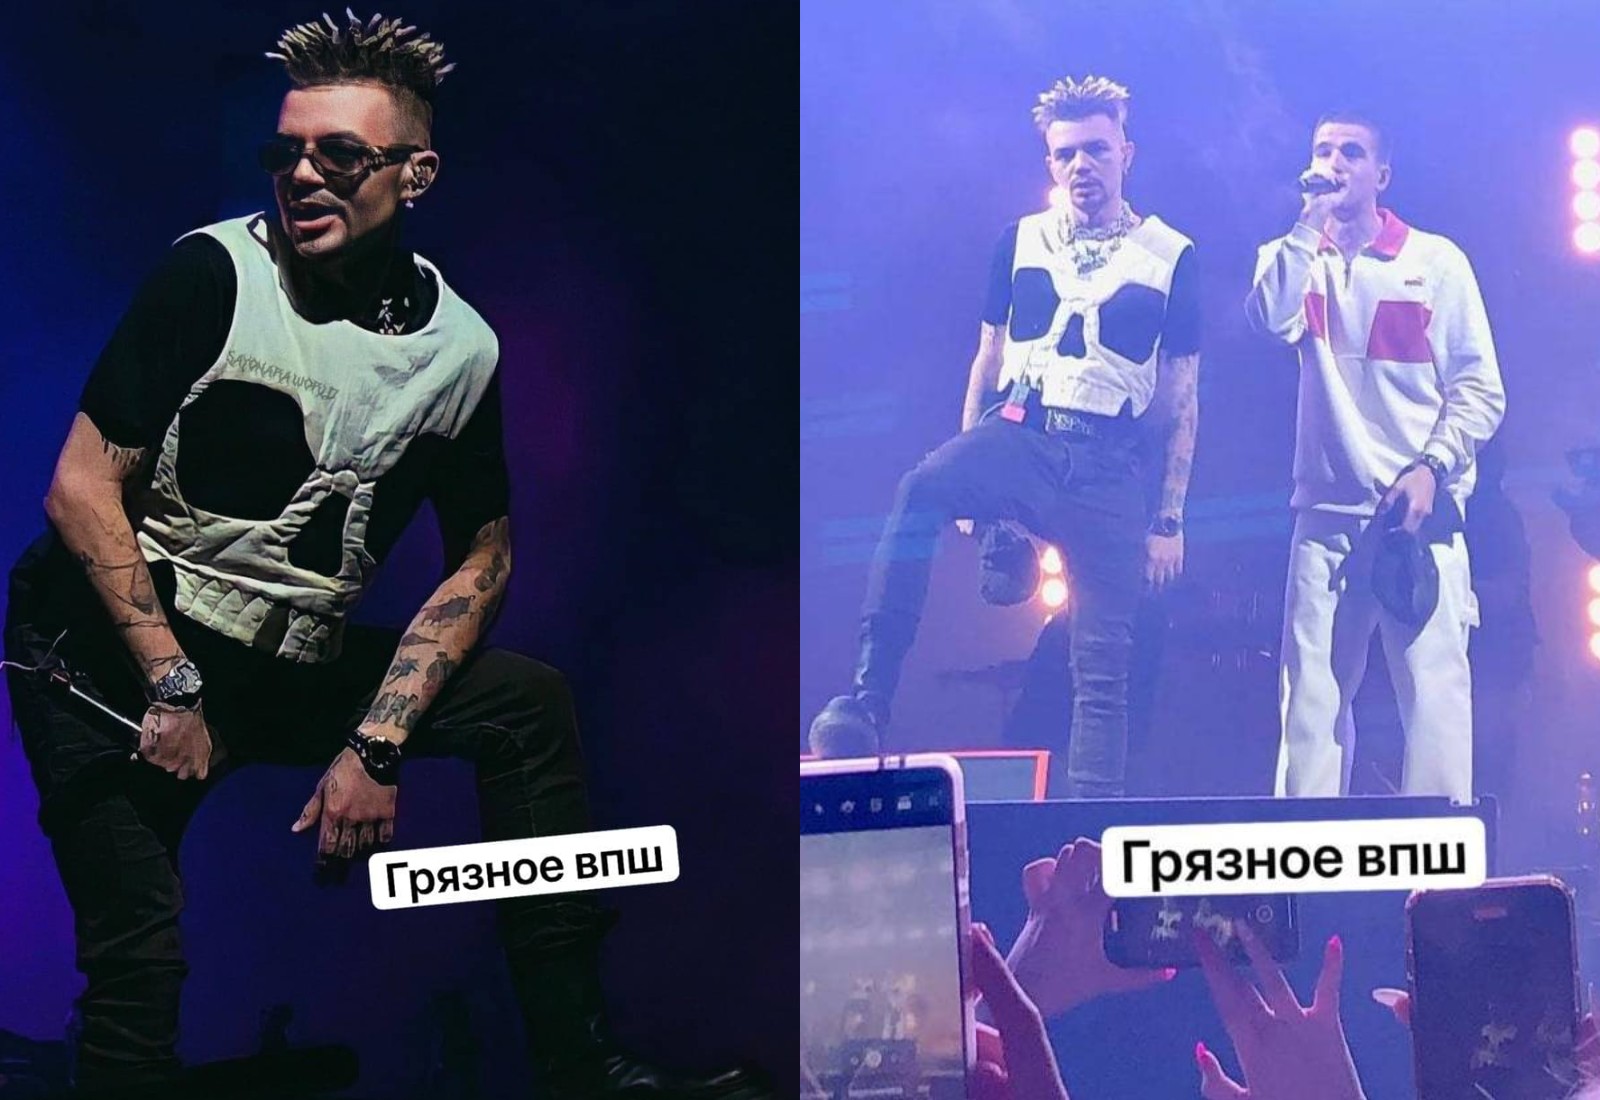 Фото © Telegram / "Грязное ВПШ"